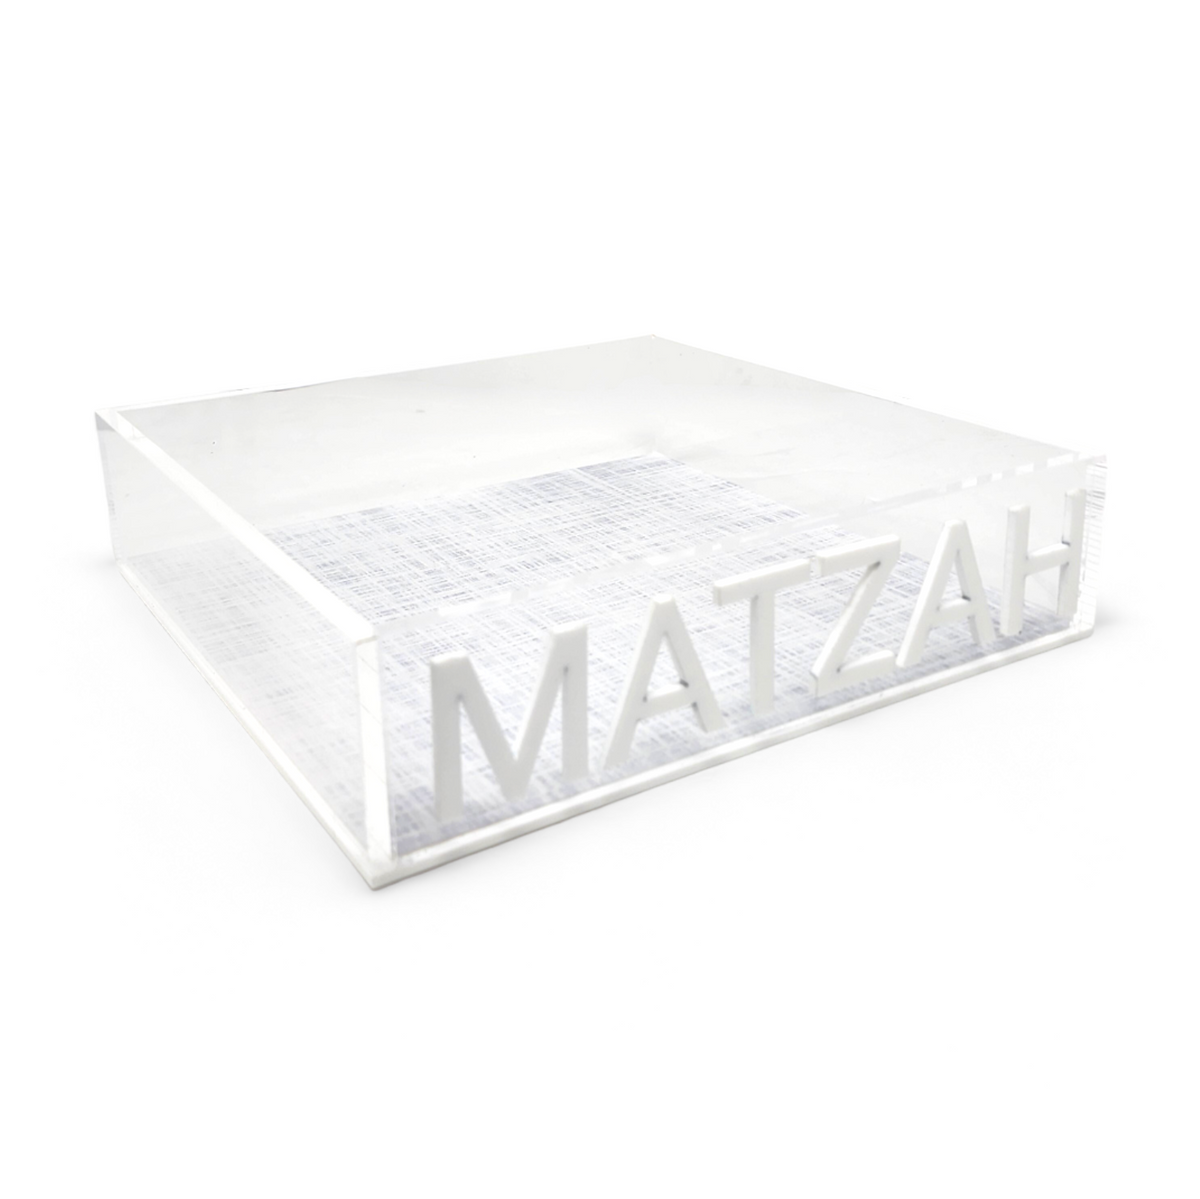 Surface Matzah Tray - IN STOCK